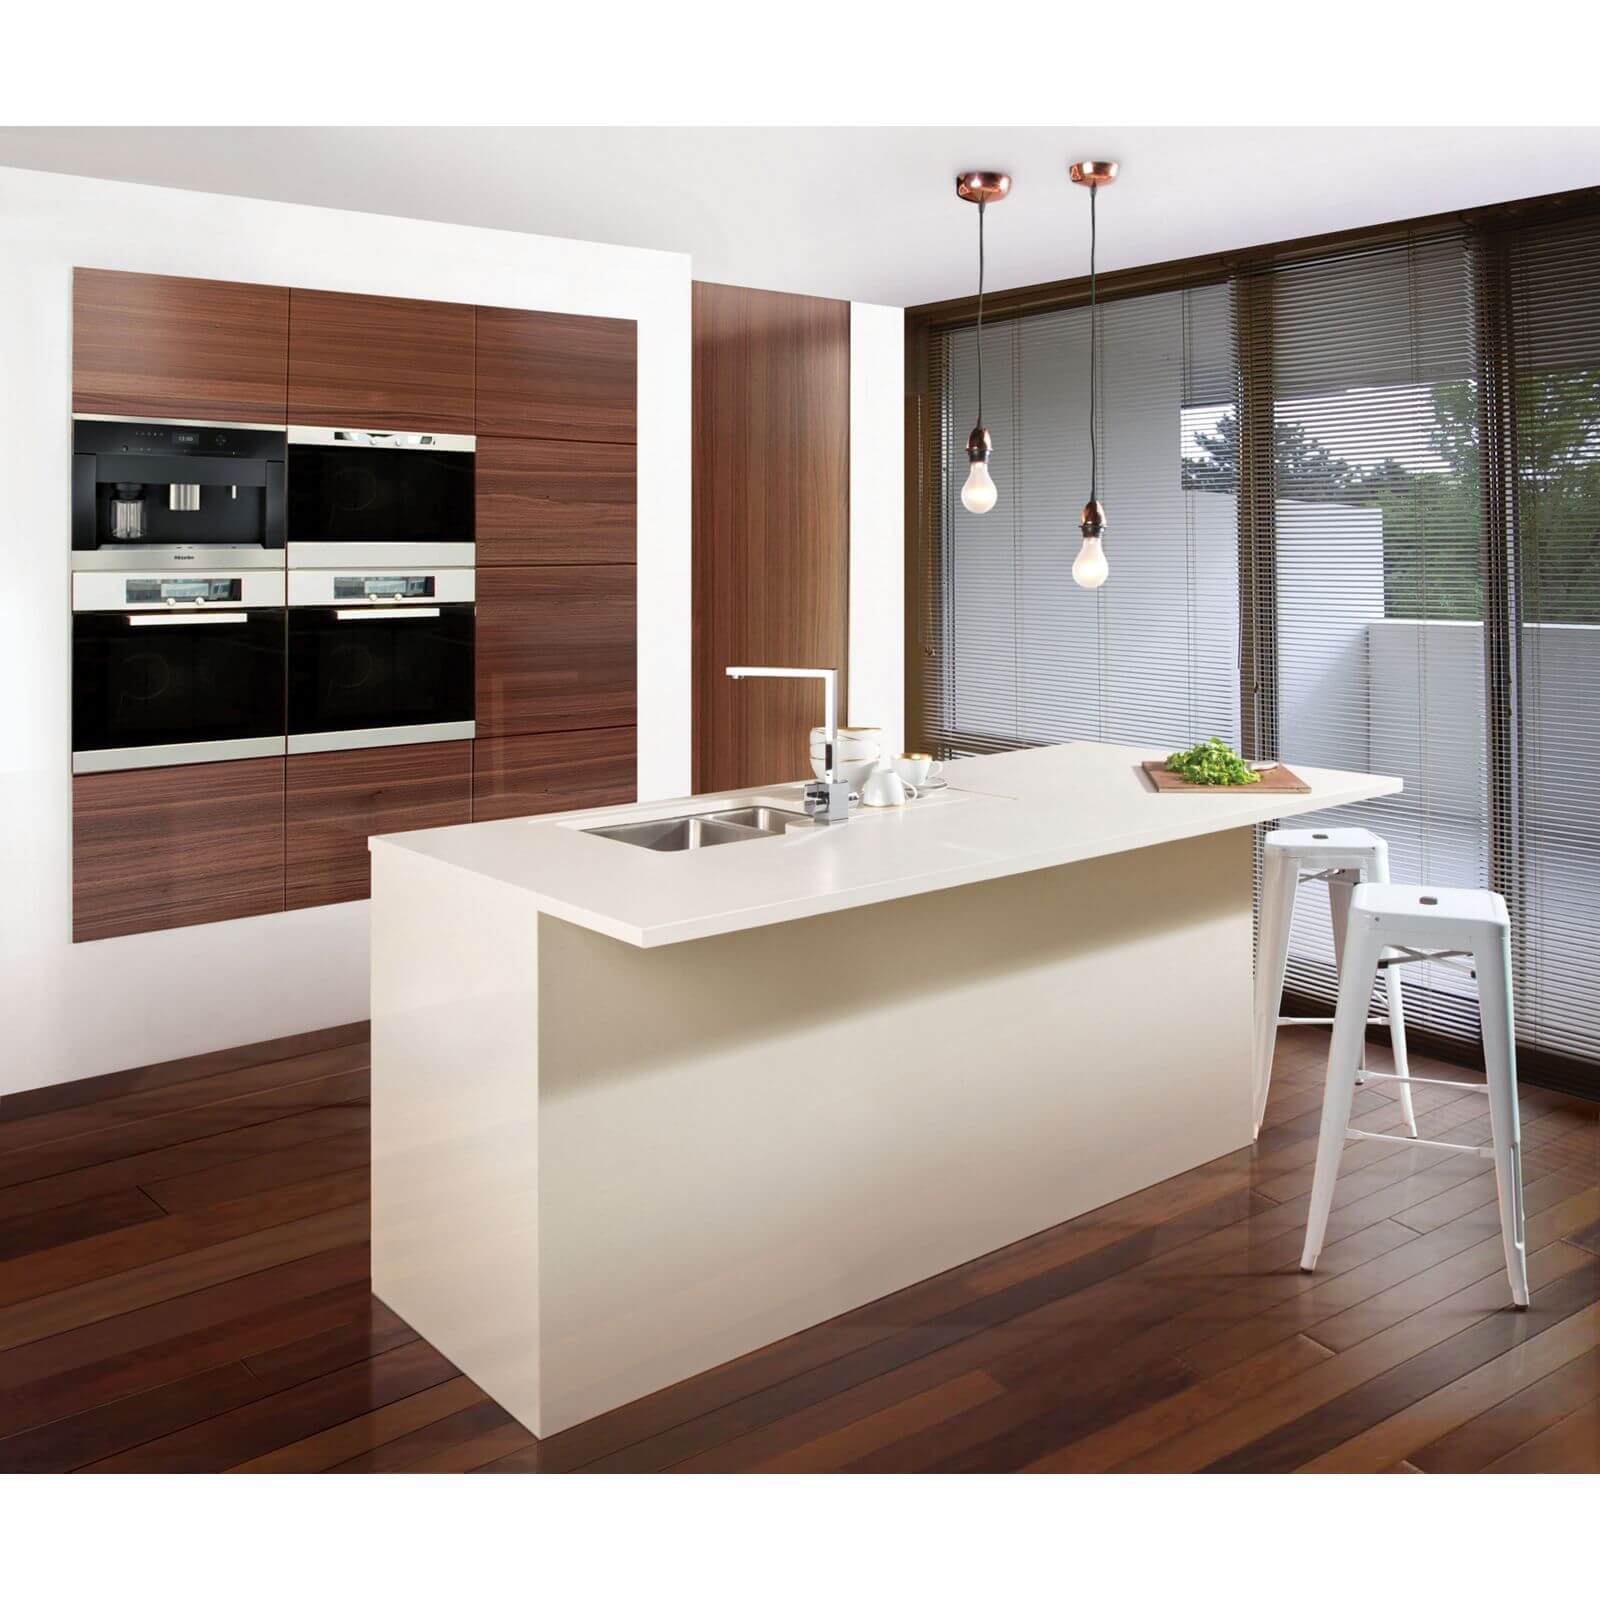 Maia Fossil Kitchen Sink Worktop - Universal Super Large Bowl - 3600 x 600 x 42mm